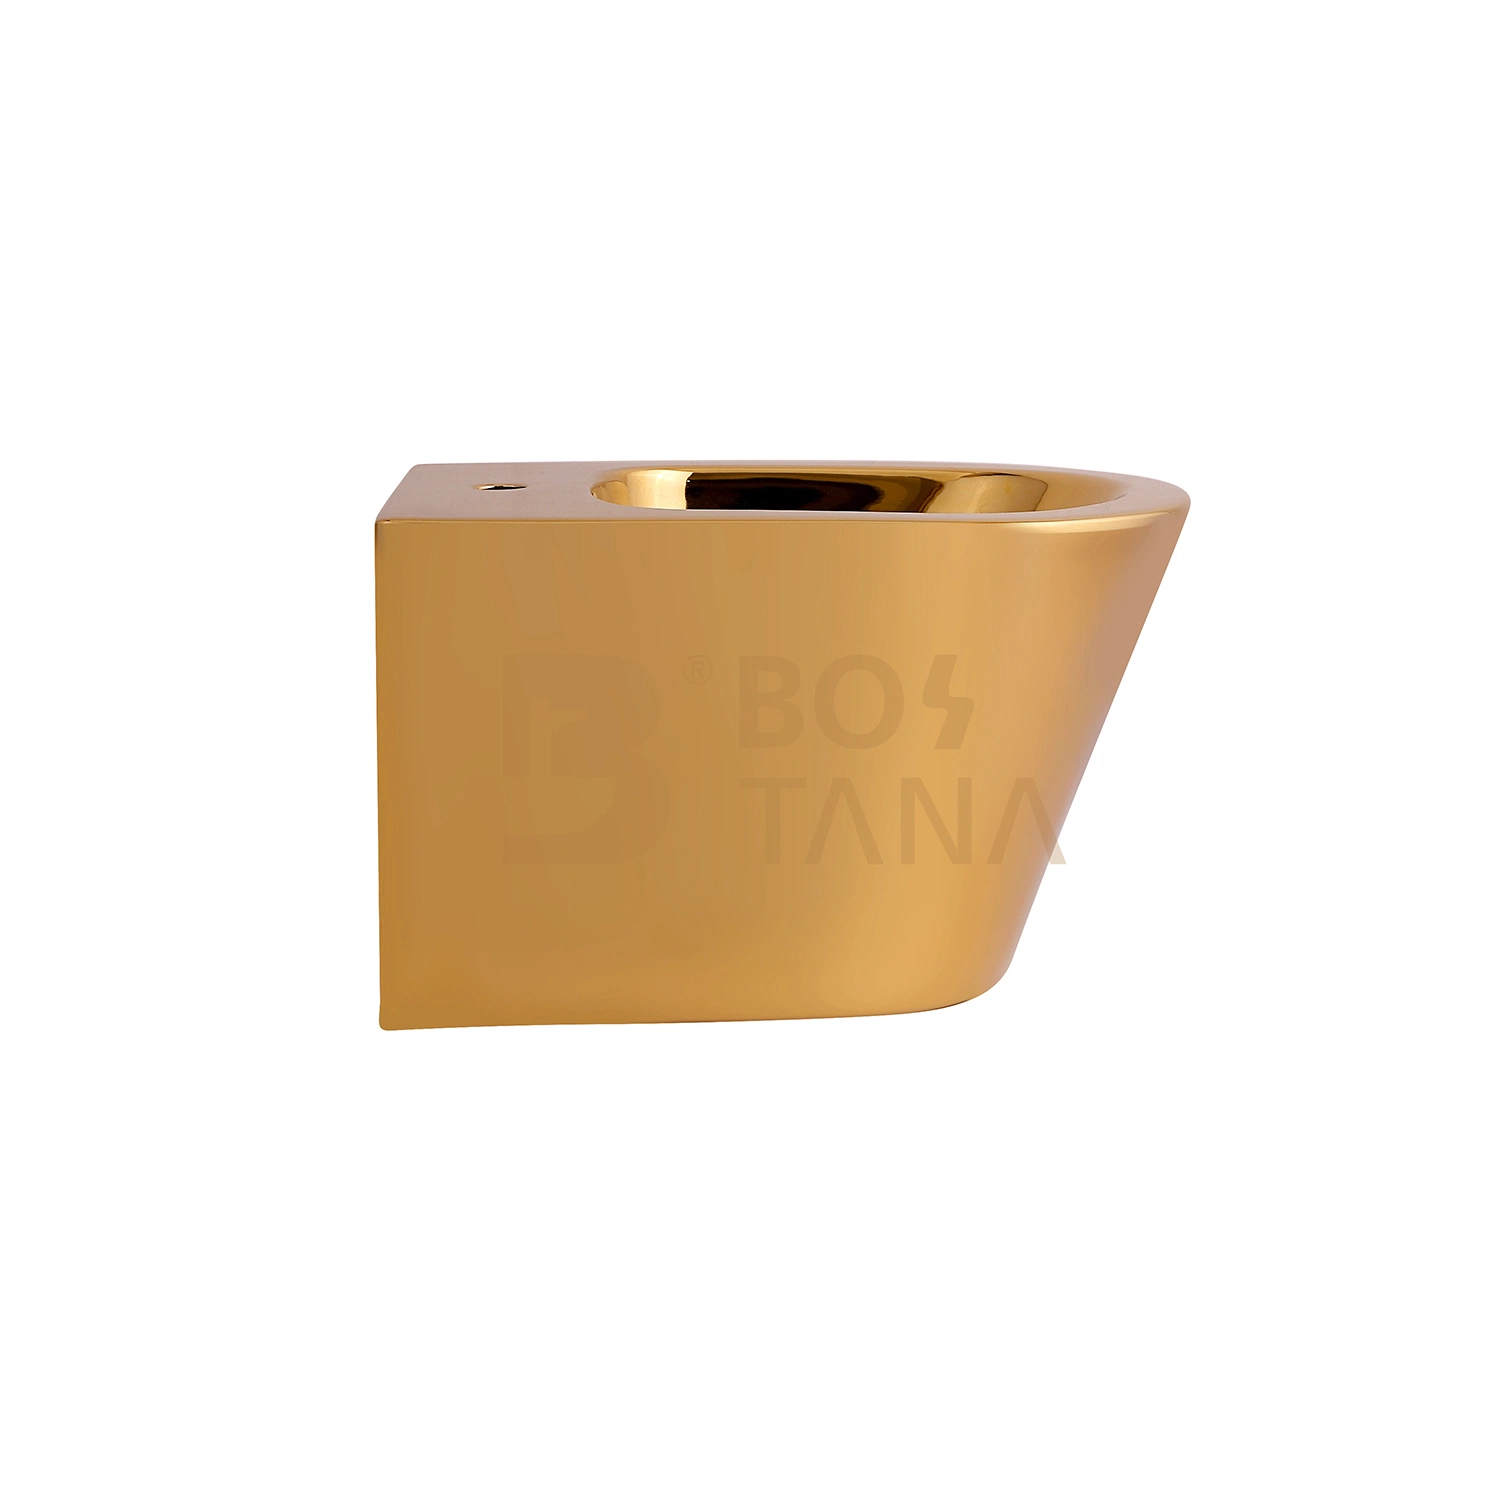 Ceramic Toilet Bidet Golden Back to Wall Bidet Bathroom Sanitaryware